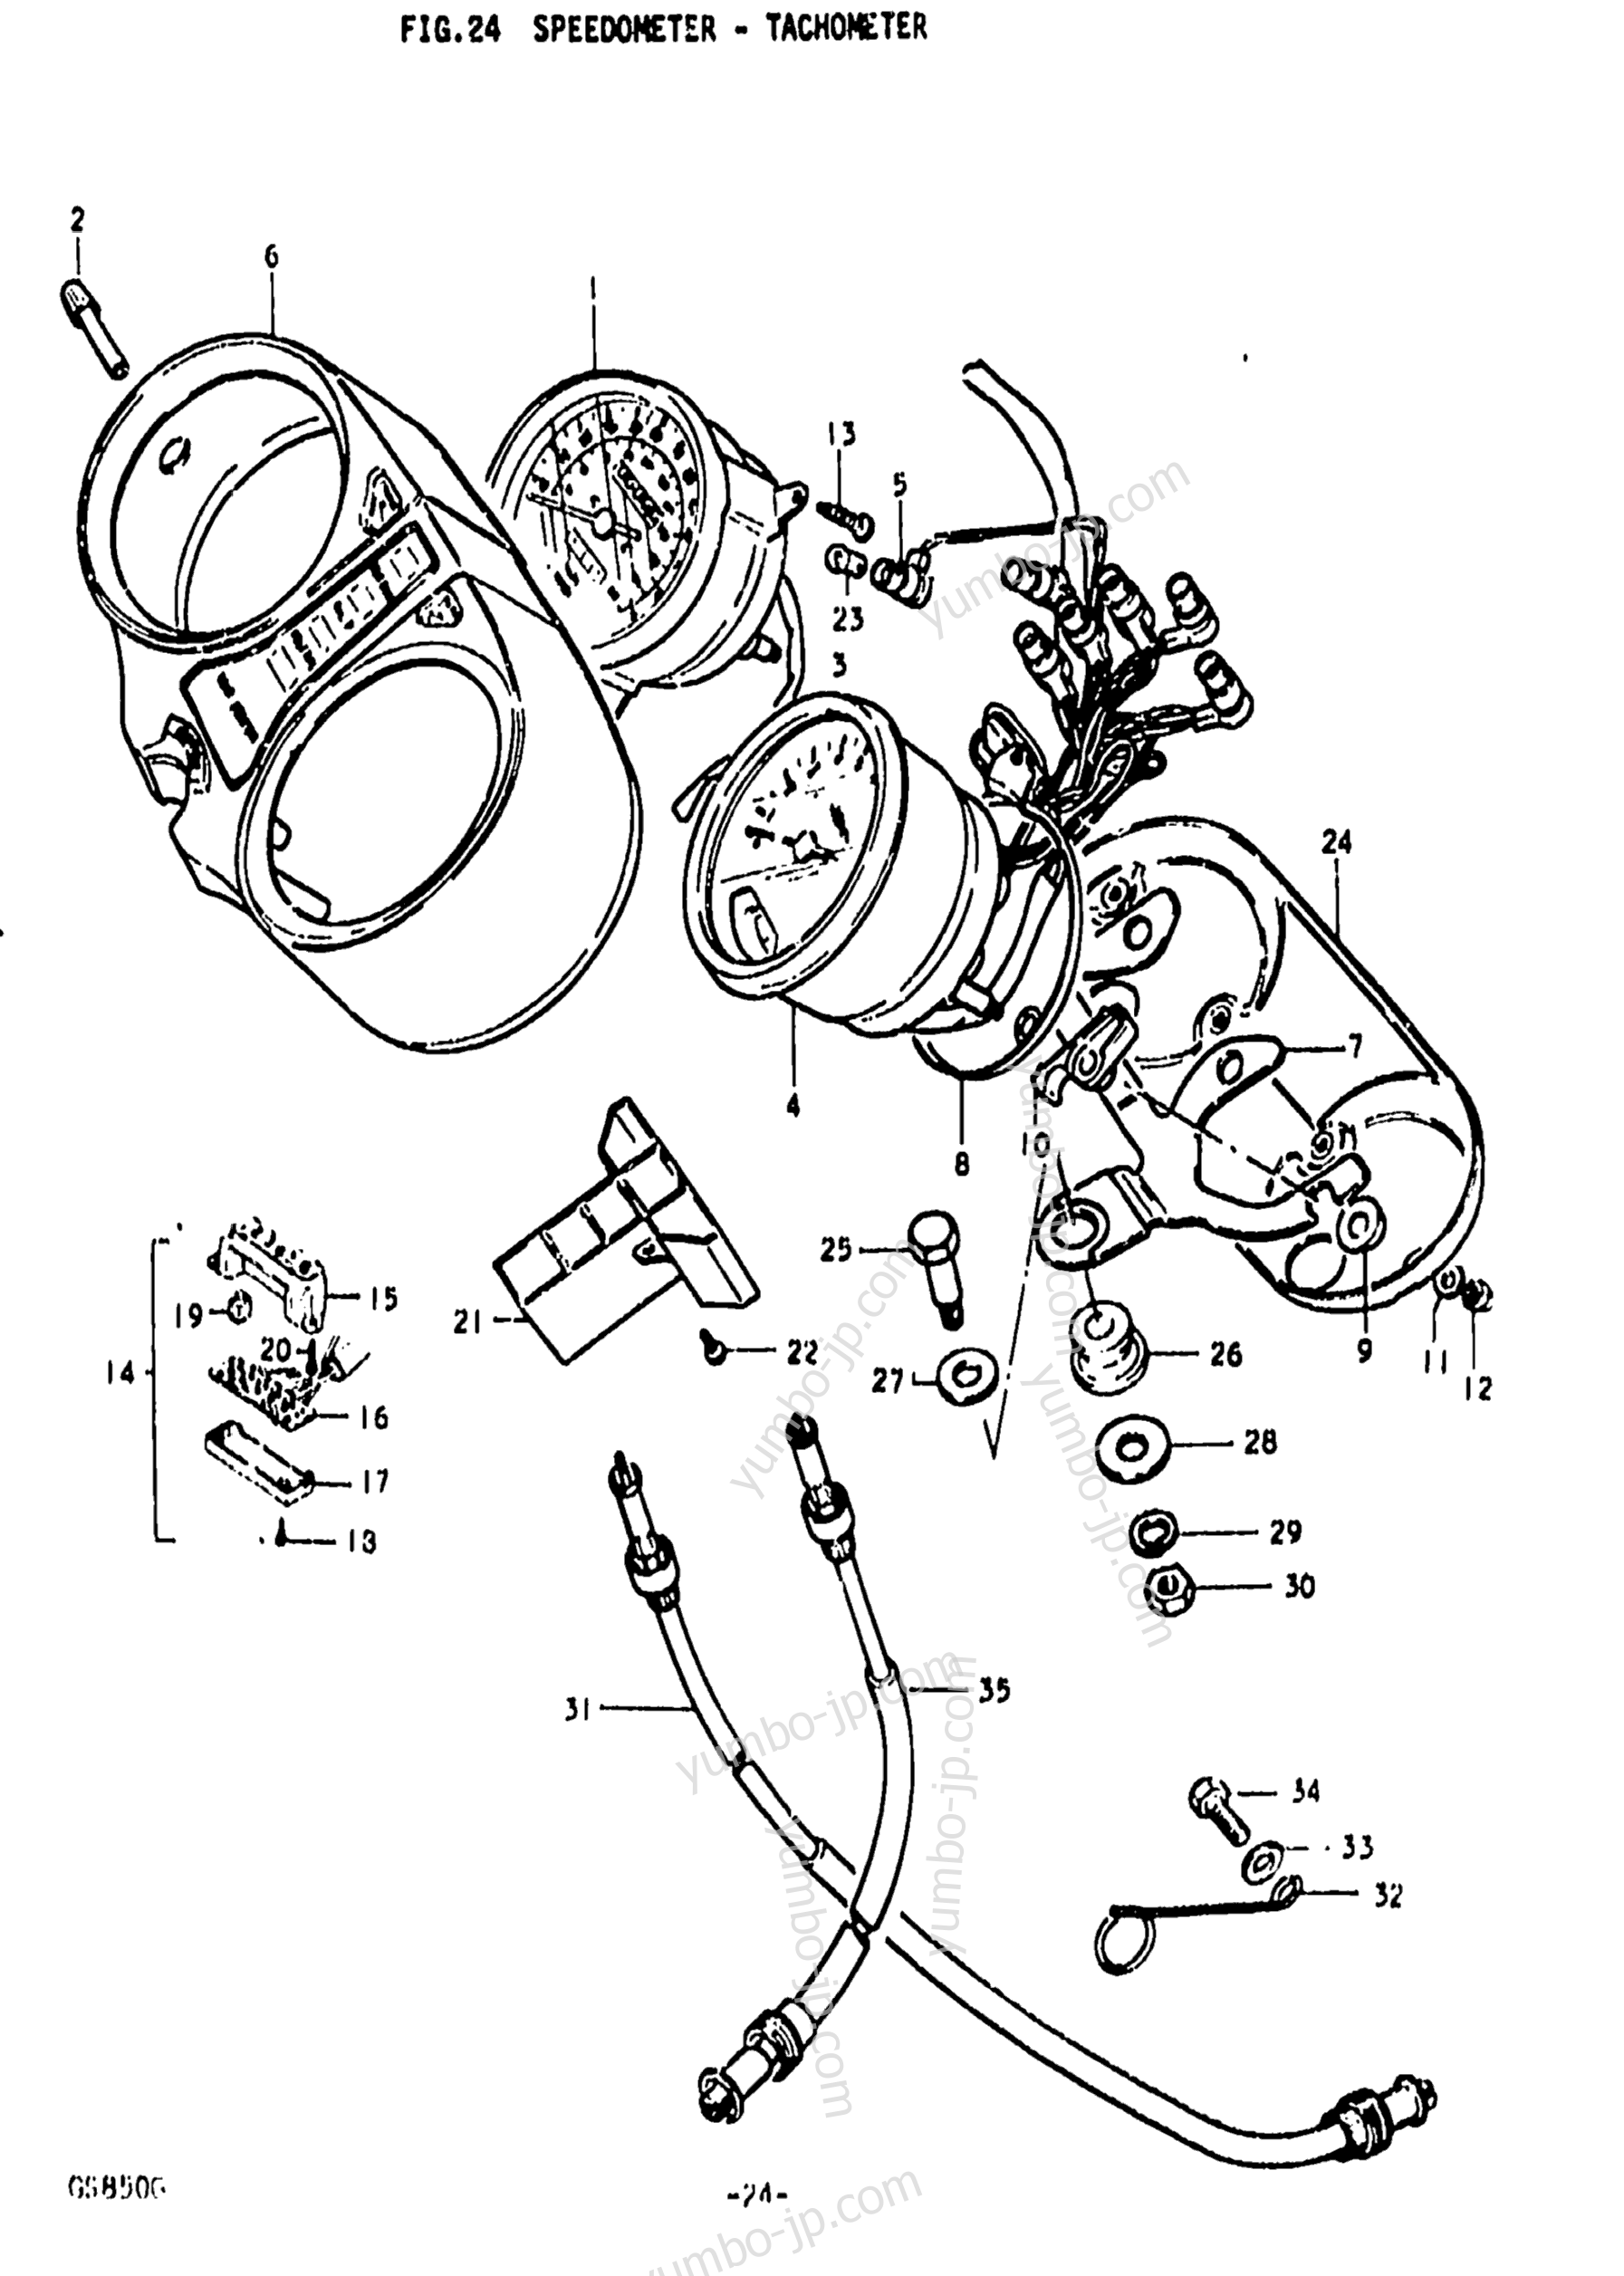 Speedometer-Tachometer for motorcycles SUZUKI GS850G 1979 year